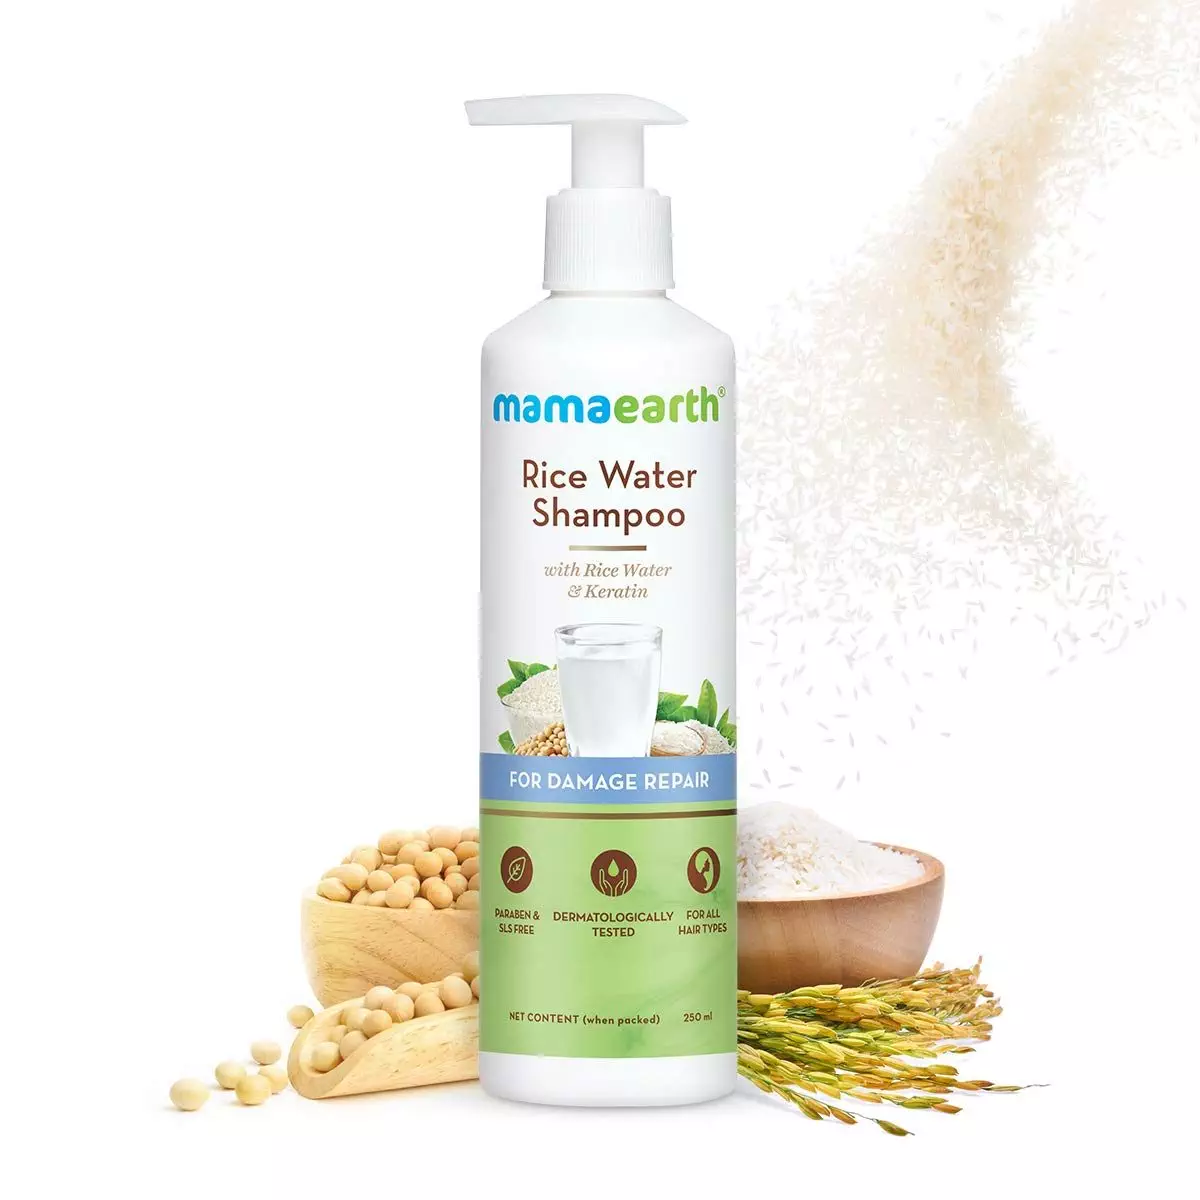 Mamaearth Rice Water Shampoo Review 14